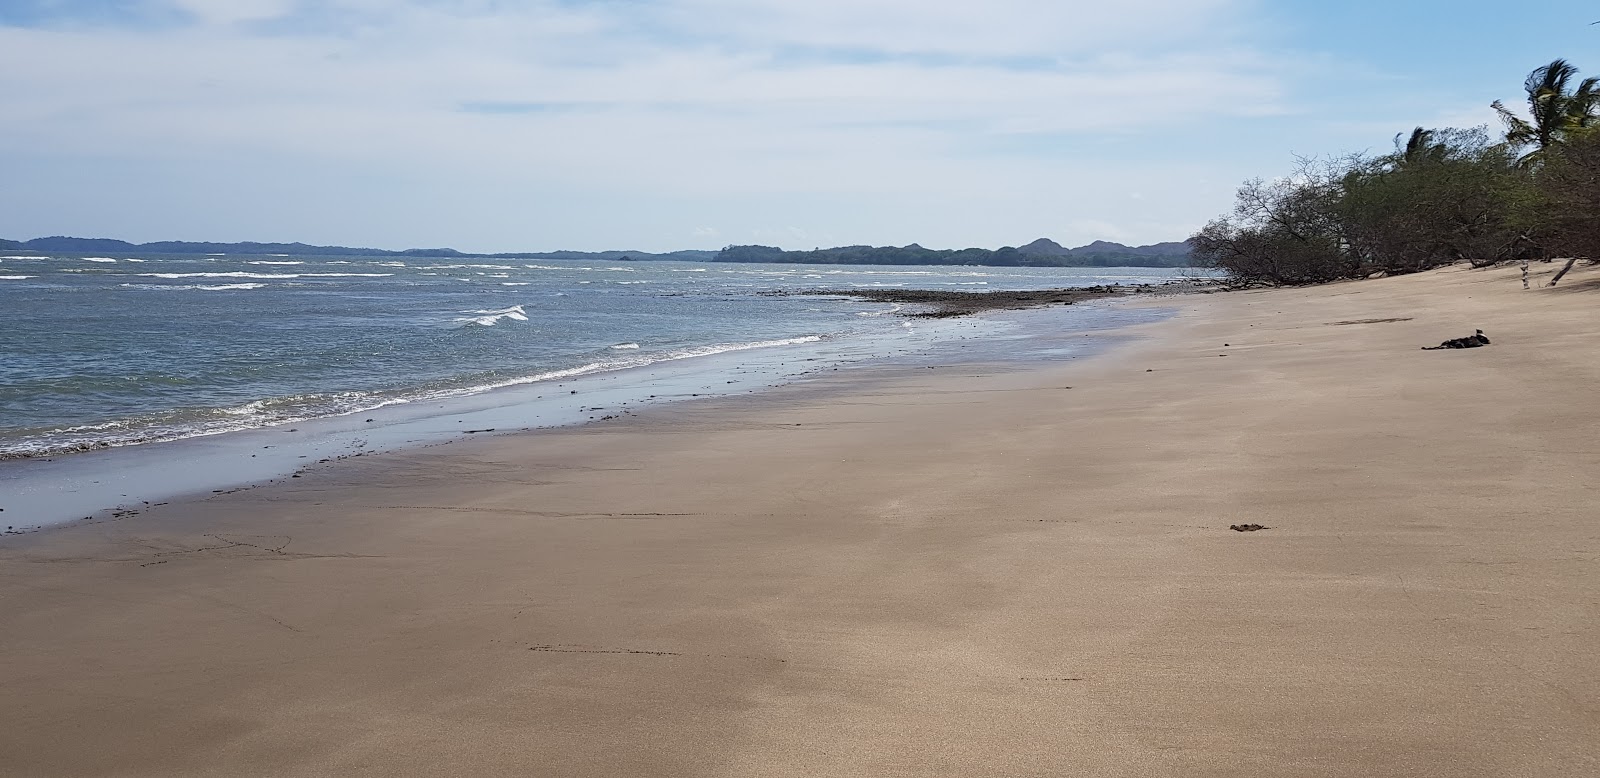 Foto di Playa Nanzal con una superficie del sabbia con ciottolame